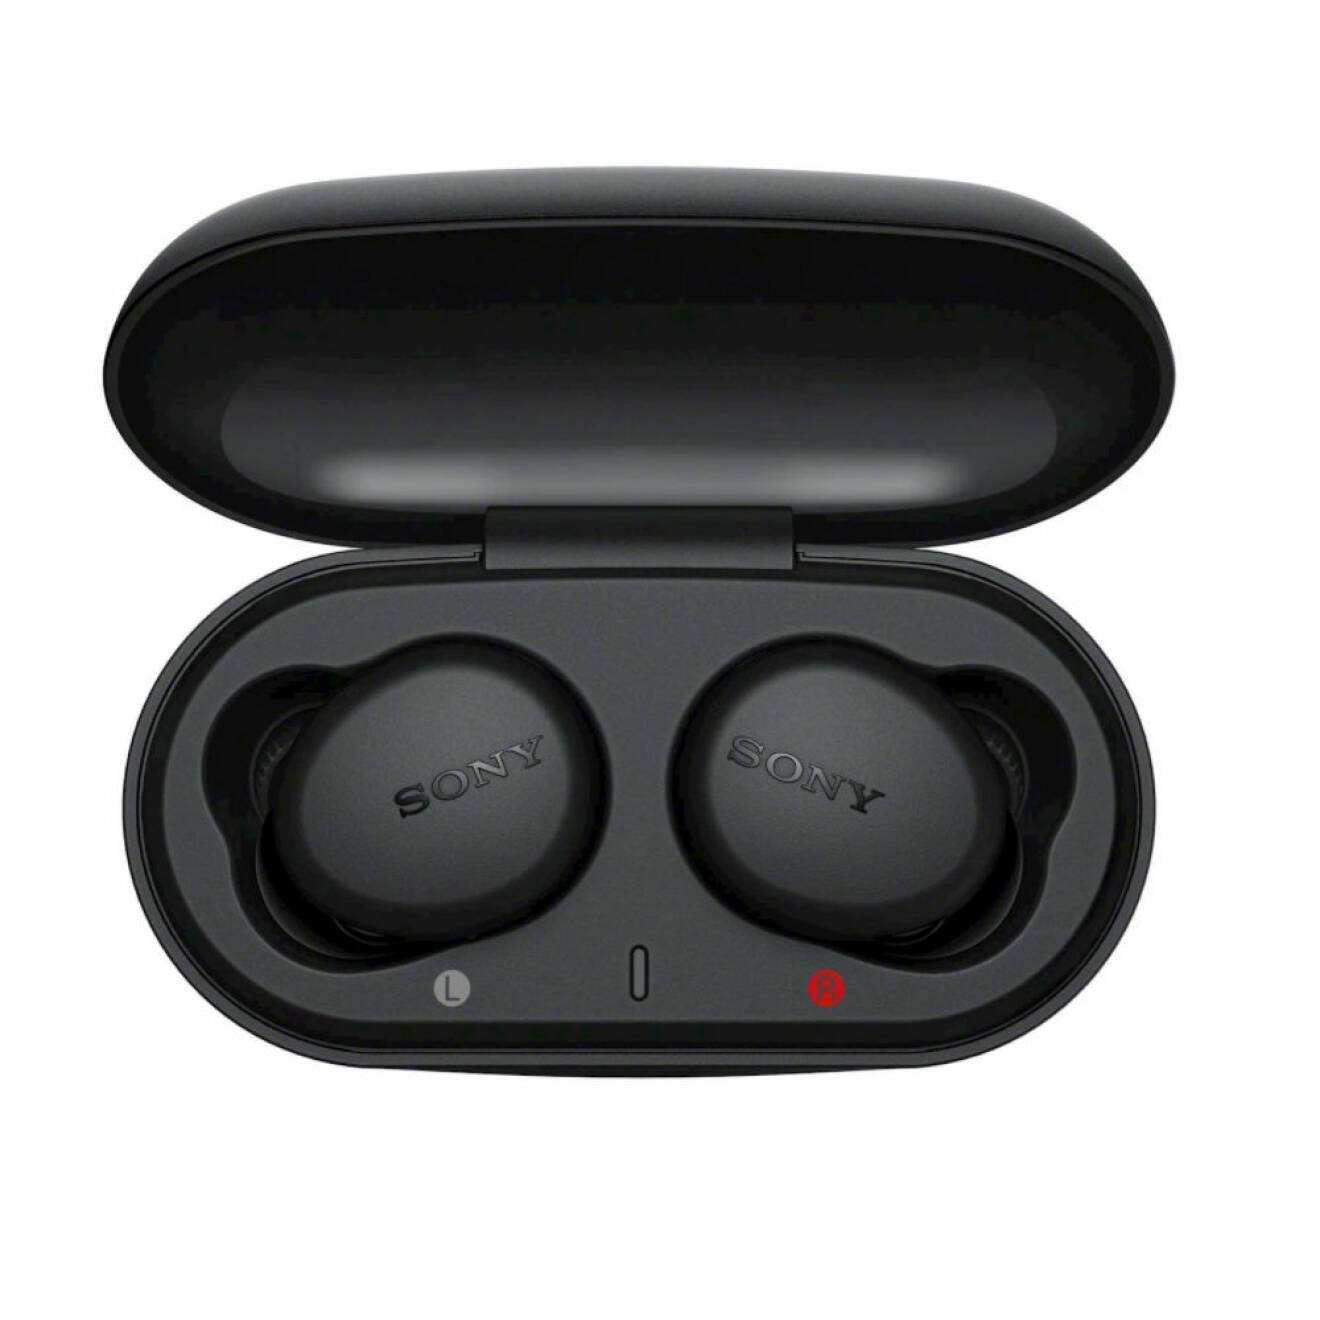 Sony WF-XB700 trådlösa hörlurar in ear